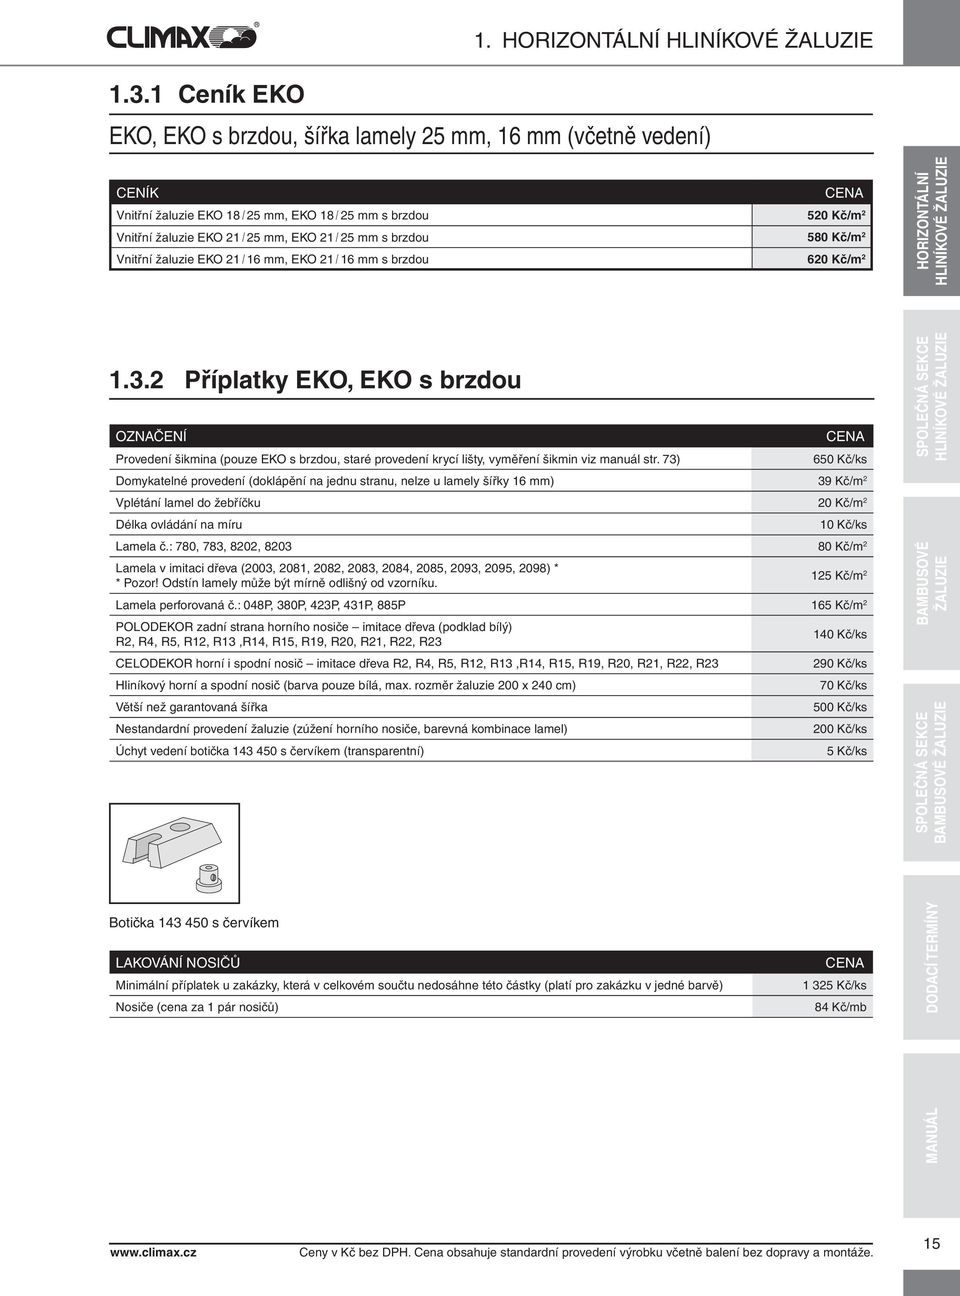 Kč/m 2 Vnitřní žaluzie EKO 21 / 16 mm, EKO 21 / 16 mm s brzdou 620 Kč/m 2 1.3.